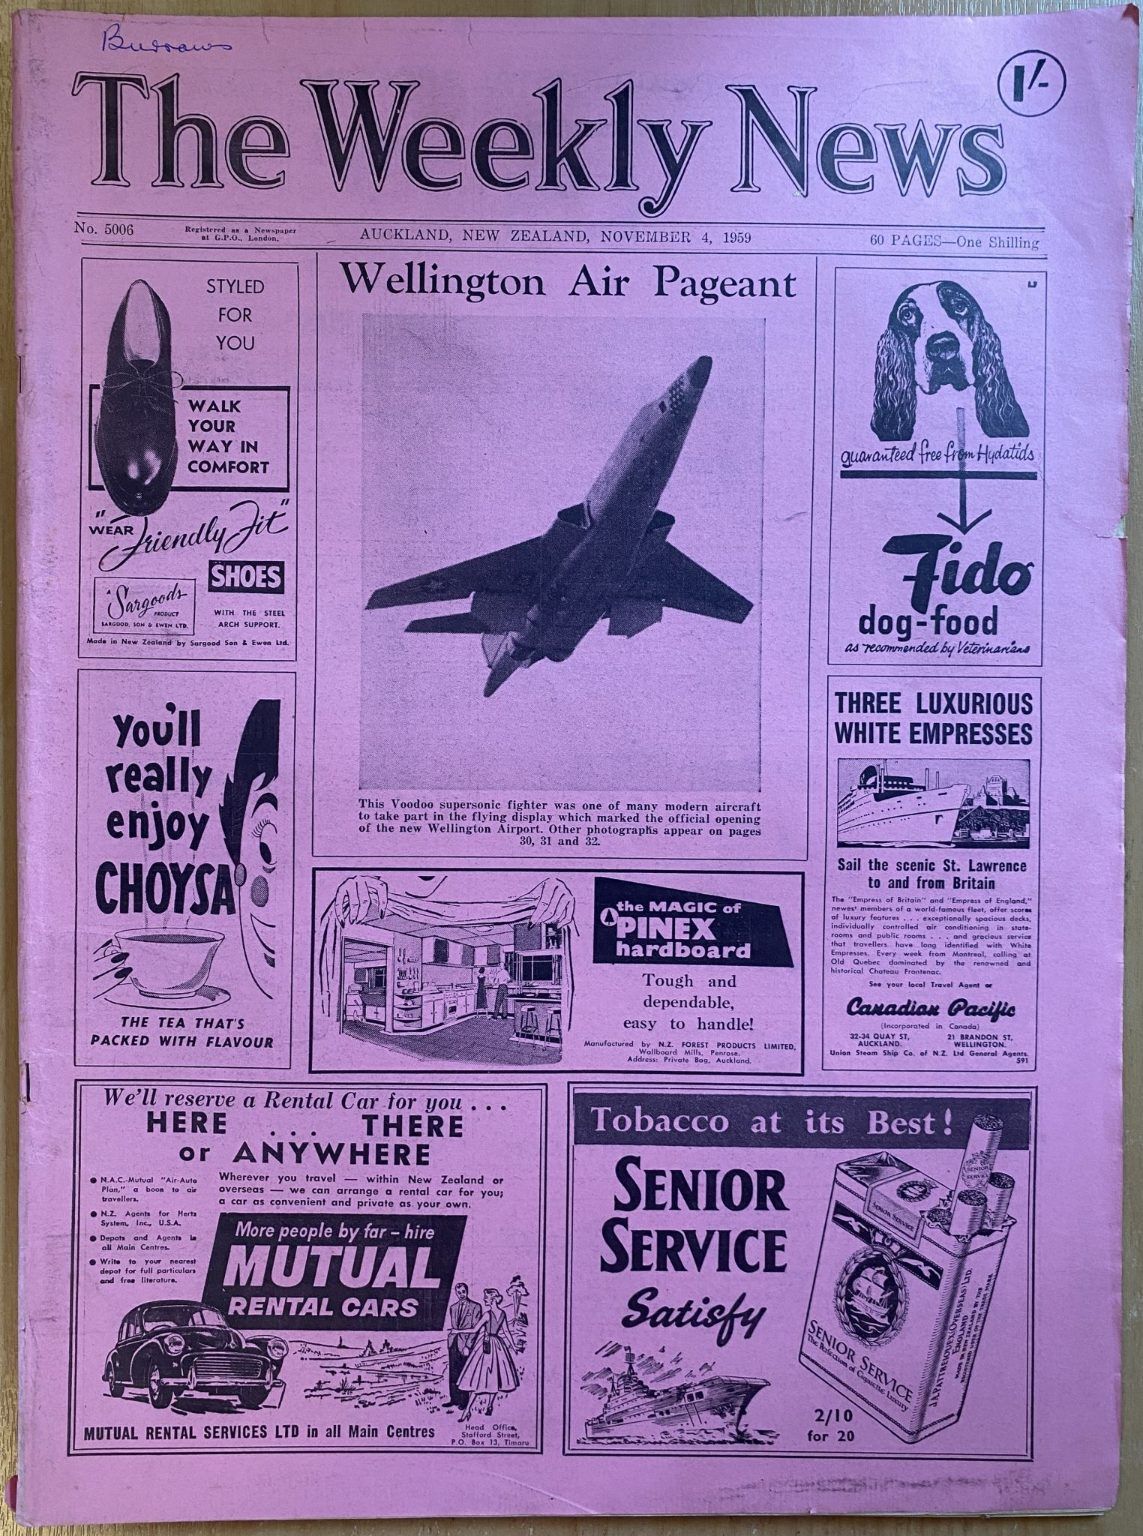 OLD NEWSPAPER: The Weekly News - No. 5006, 4 November 1959